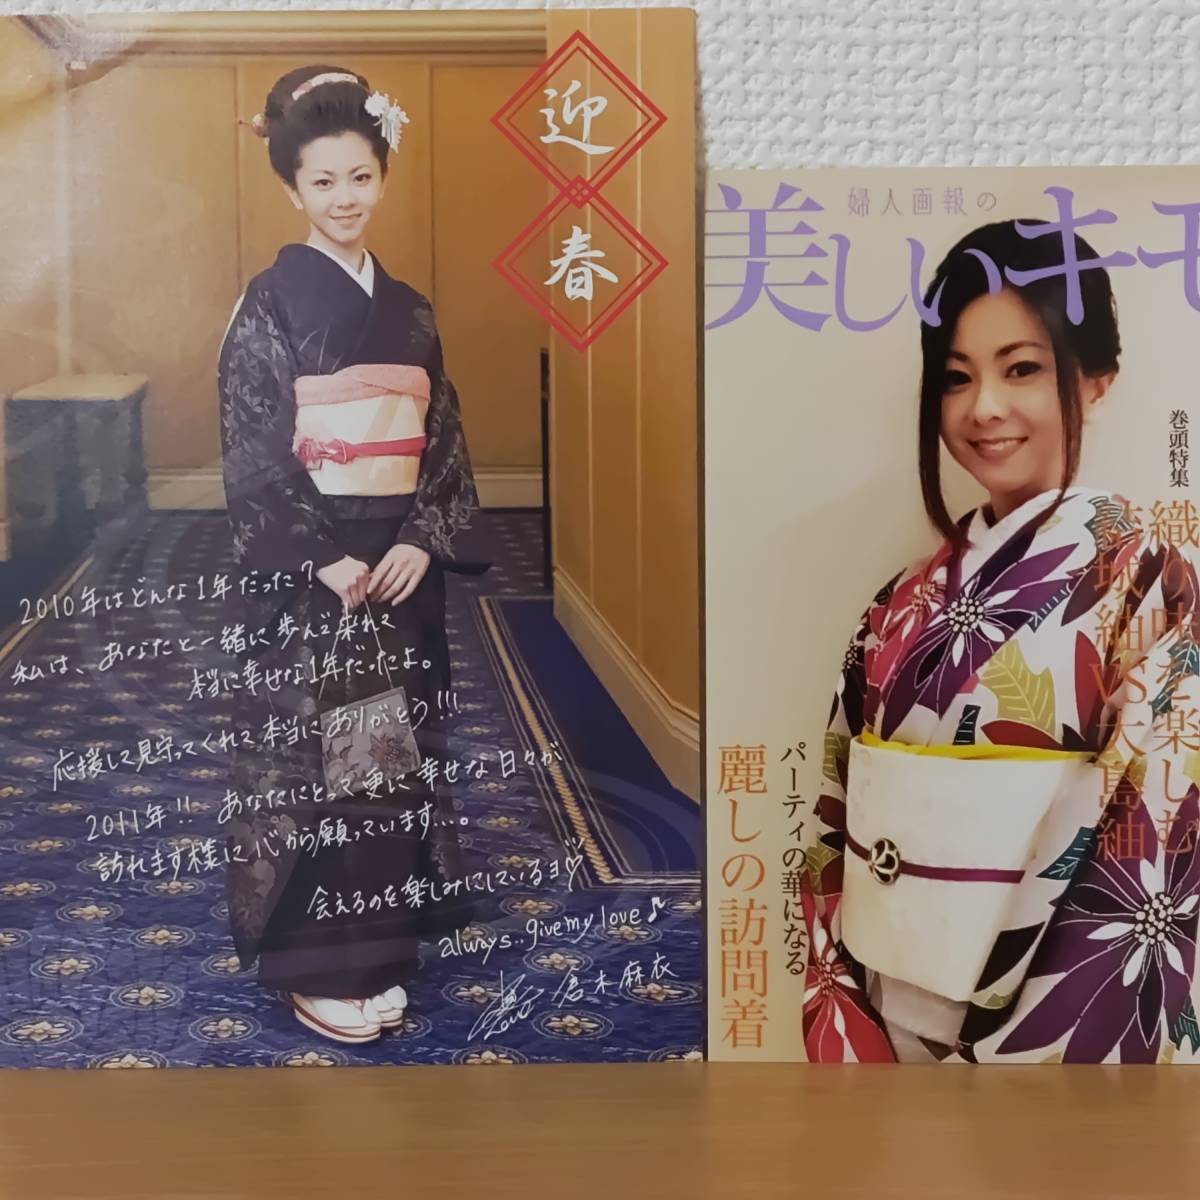 Super rare☆FC limited②New Year's postcard Mai Kuraki greeting card New Year's card 2010-2011 Postcard Newsletter Message card Kimono Bromide Photo☆Mai-K, K row, Mai Kuraki, others